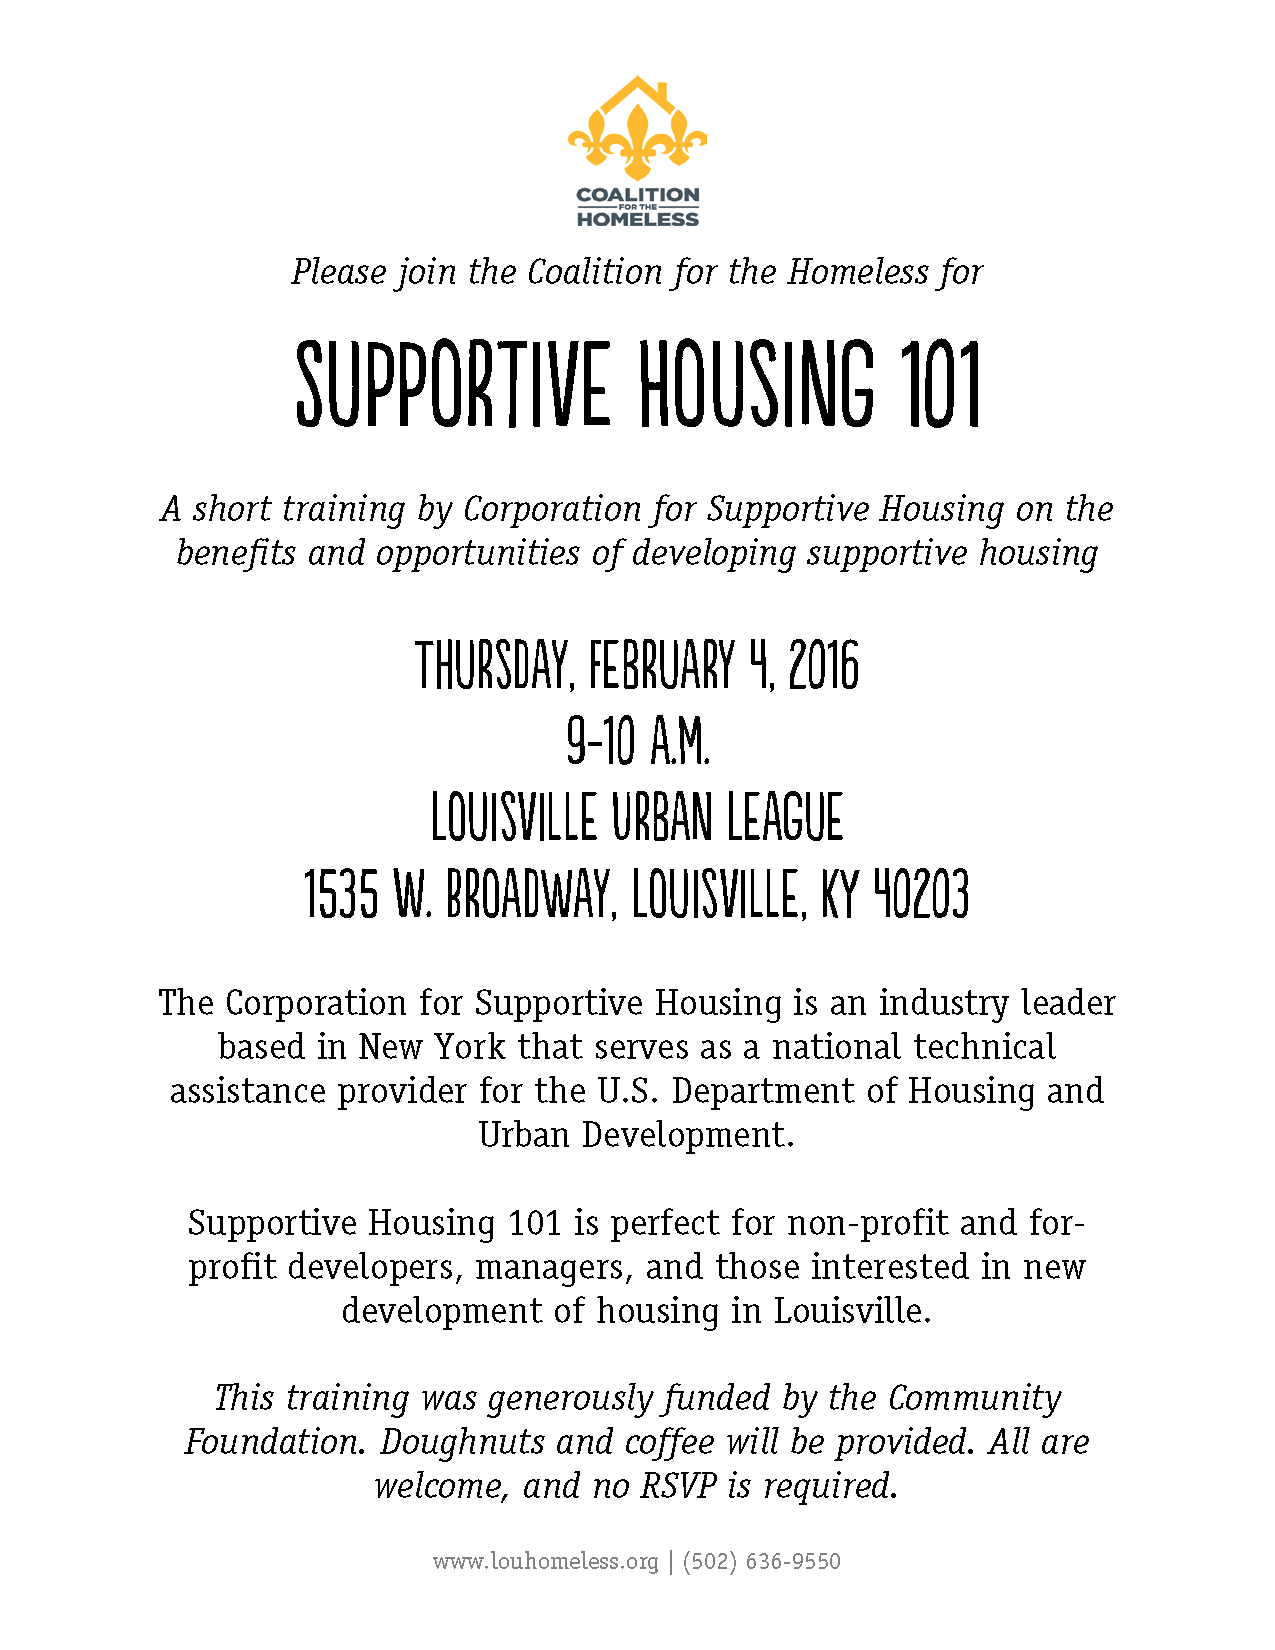 Supportive Housing 101 - reschedule